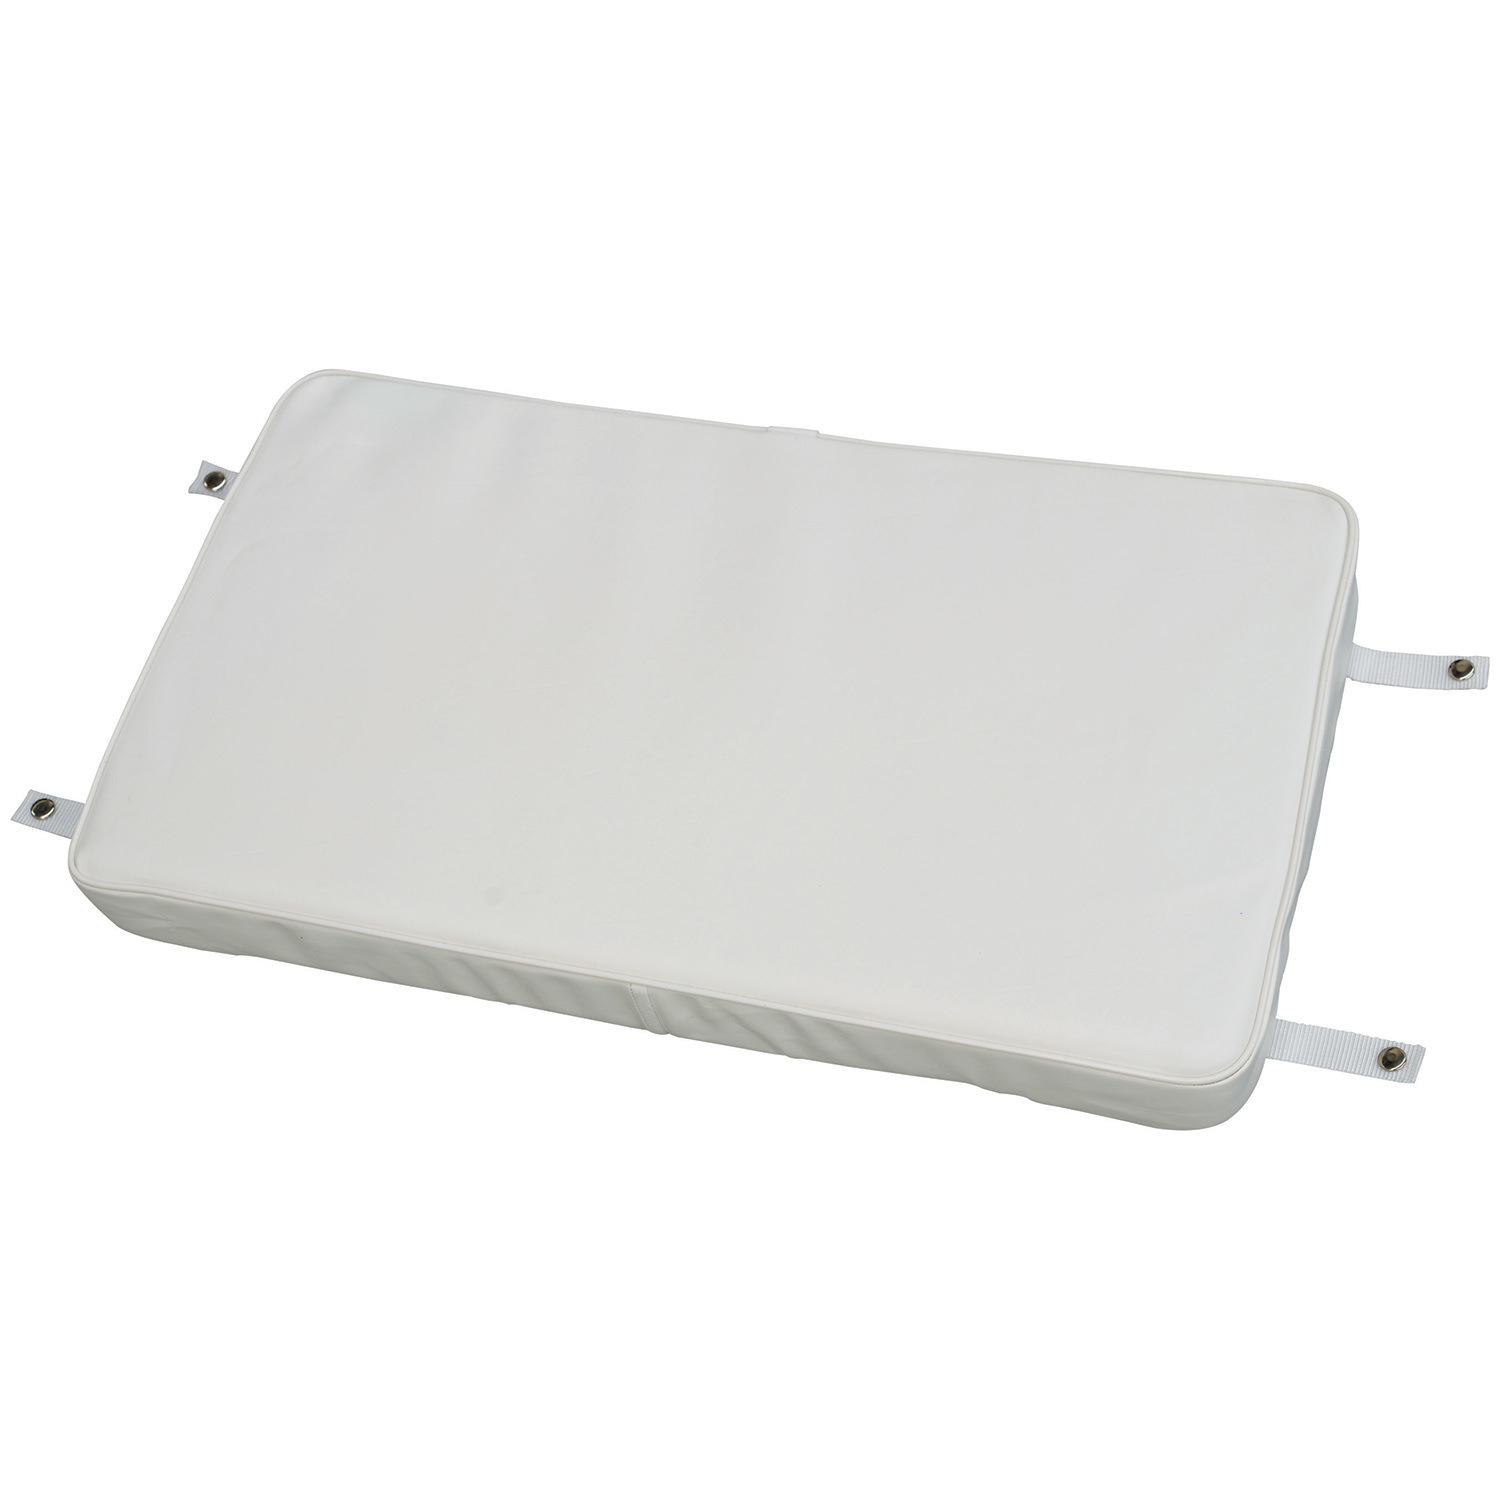 Igloo 8497 Chest Cooler Cooler Seat Cushion Marine White Vinyl White New 